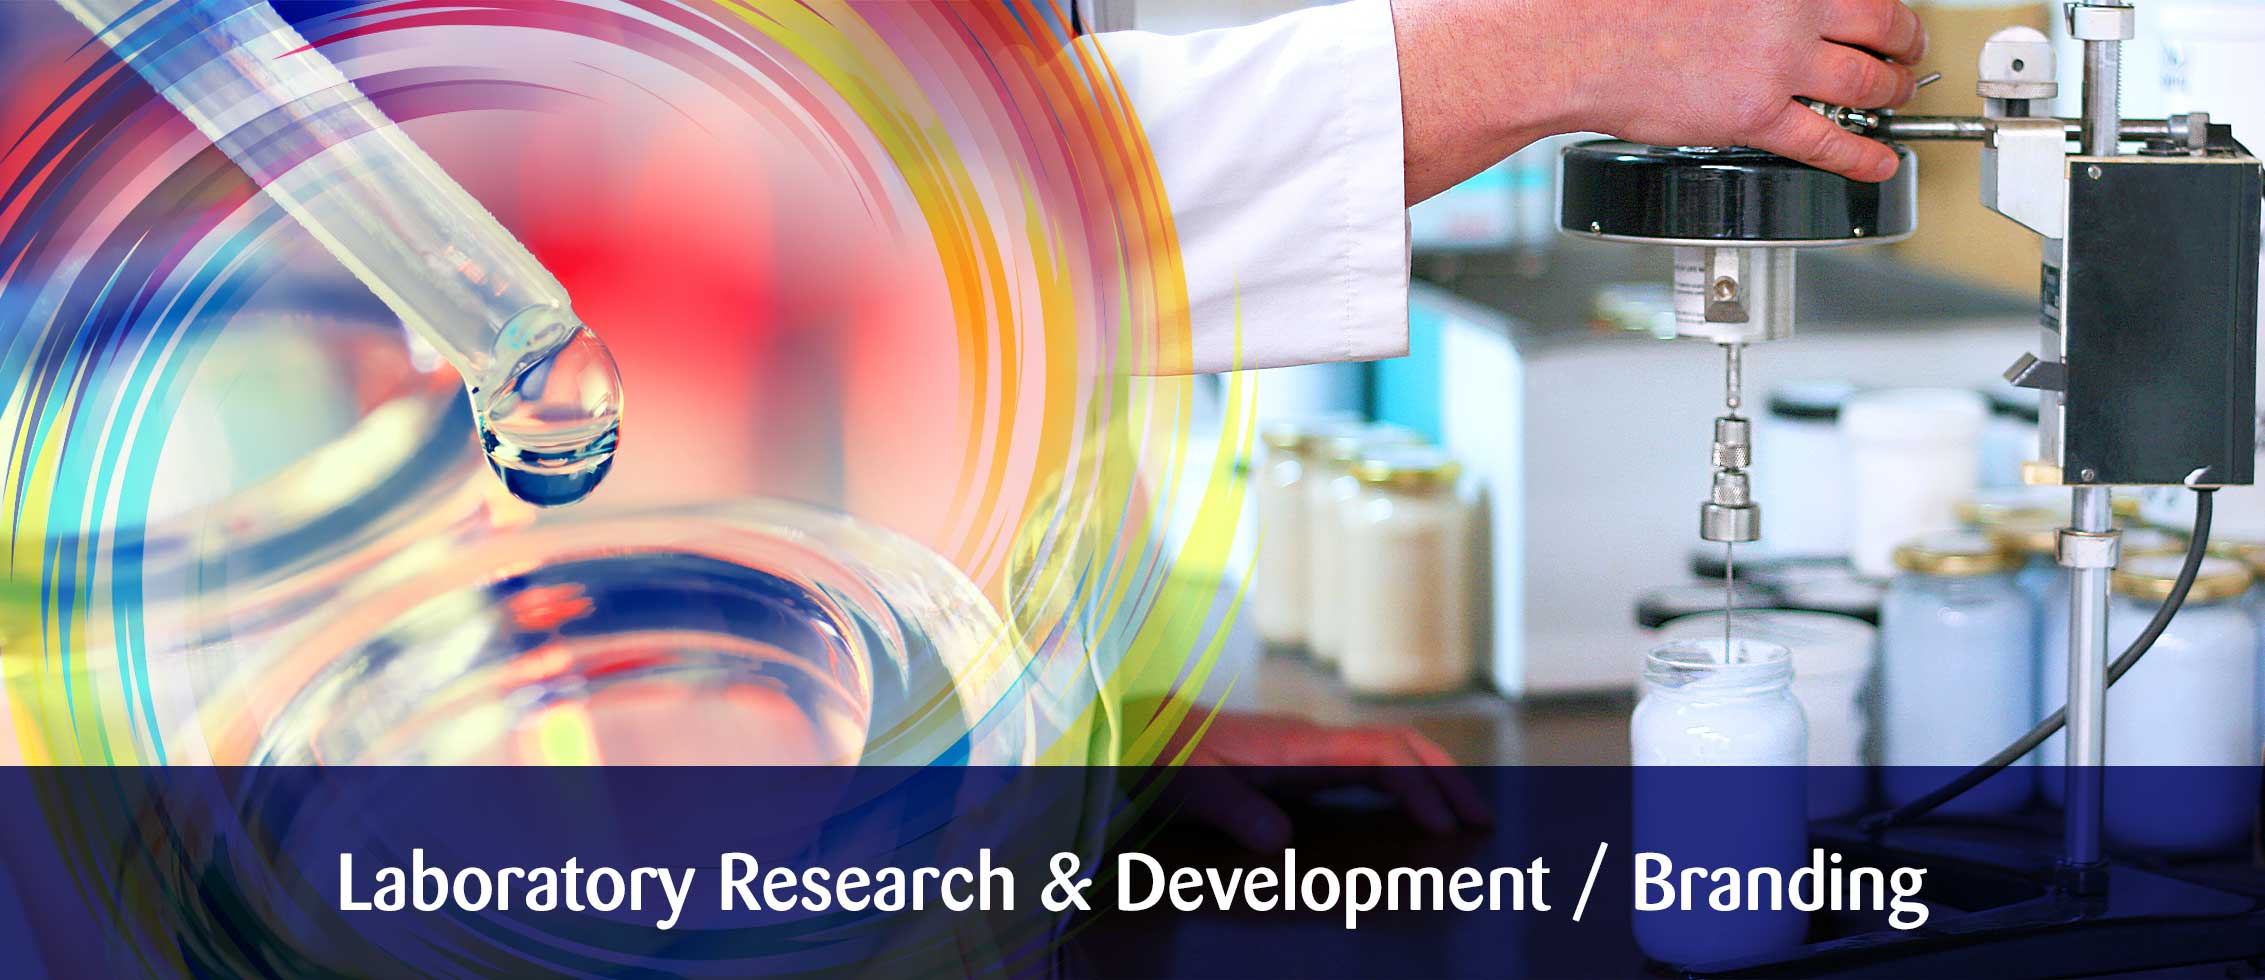 Laboratory Research and Development, Branding